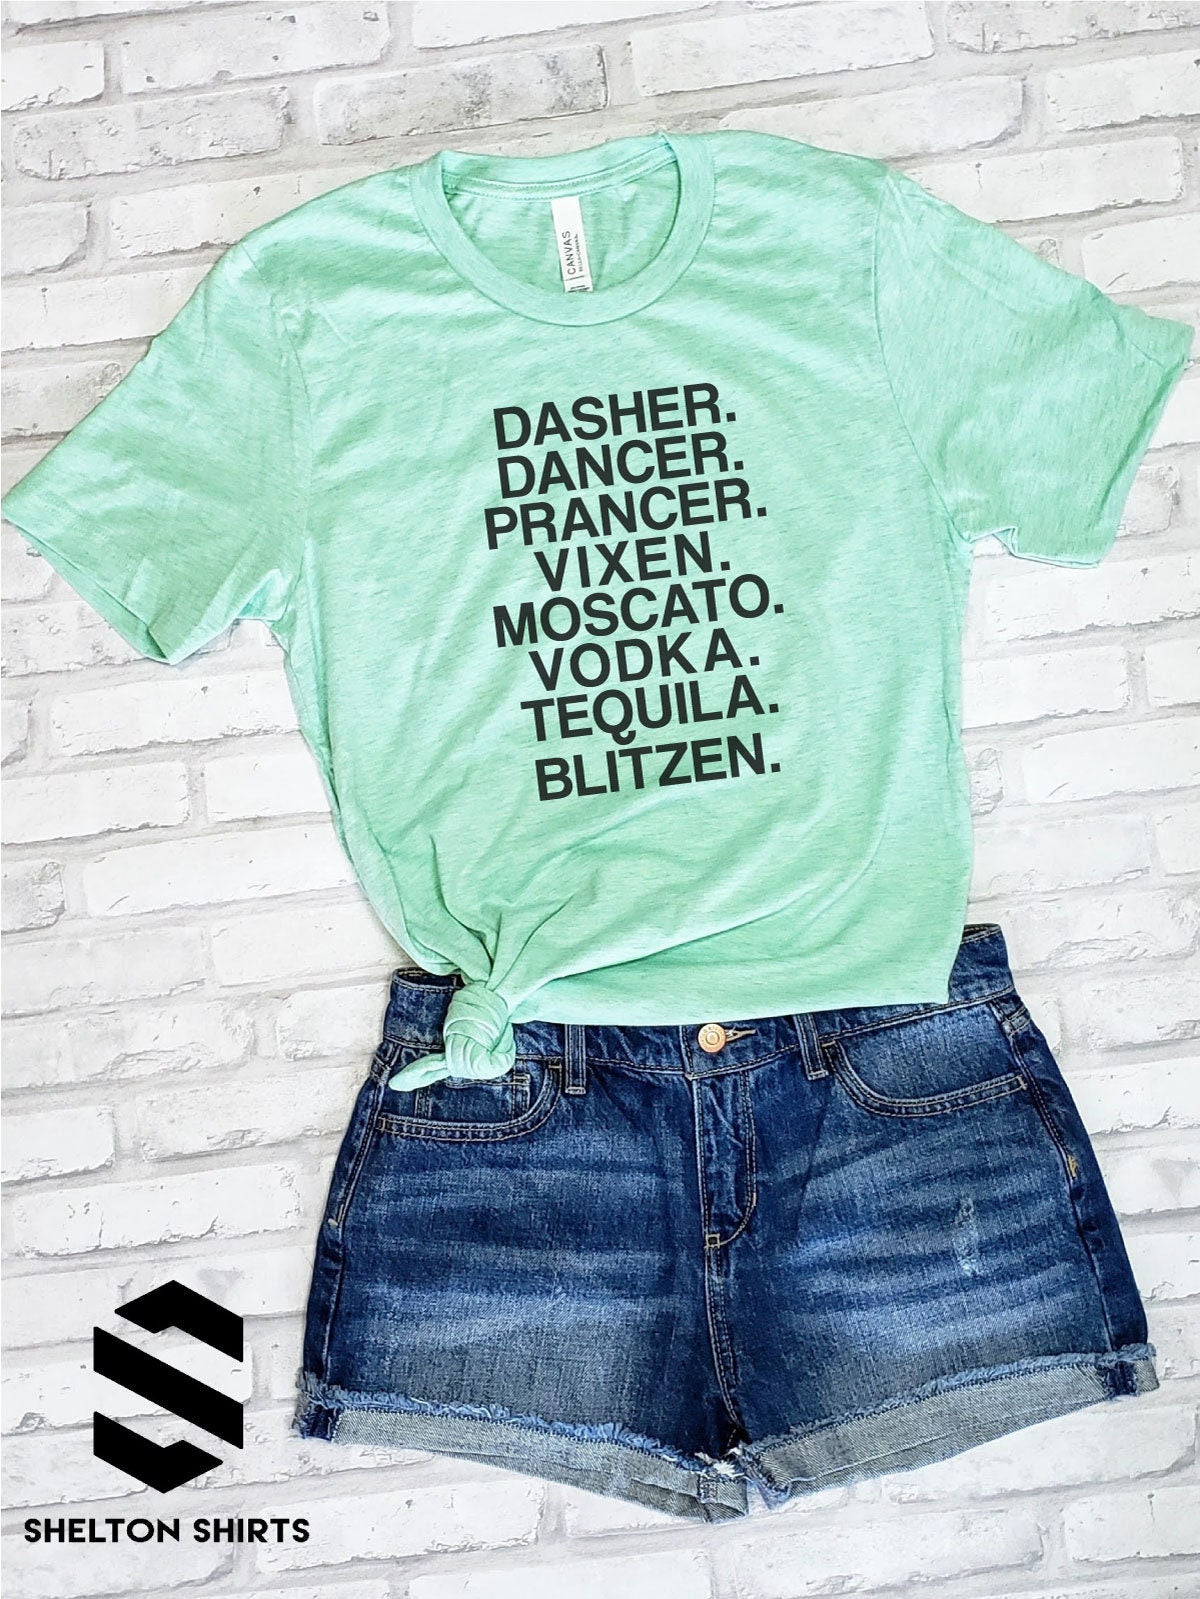 Dasher Dancer Prancer Vixen Moscato Vodka Tequila Blitzen T-Shirt